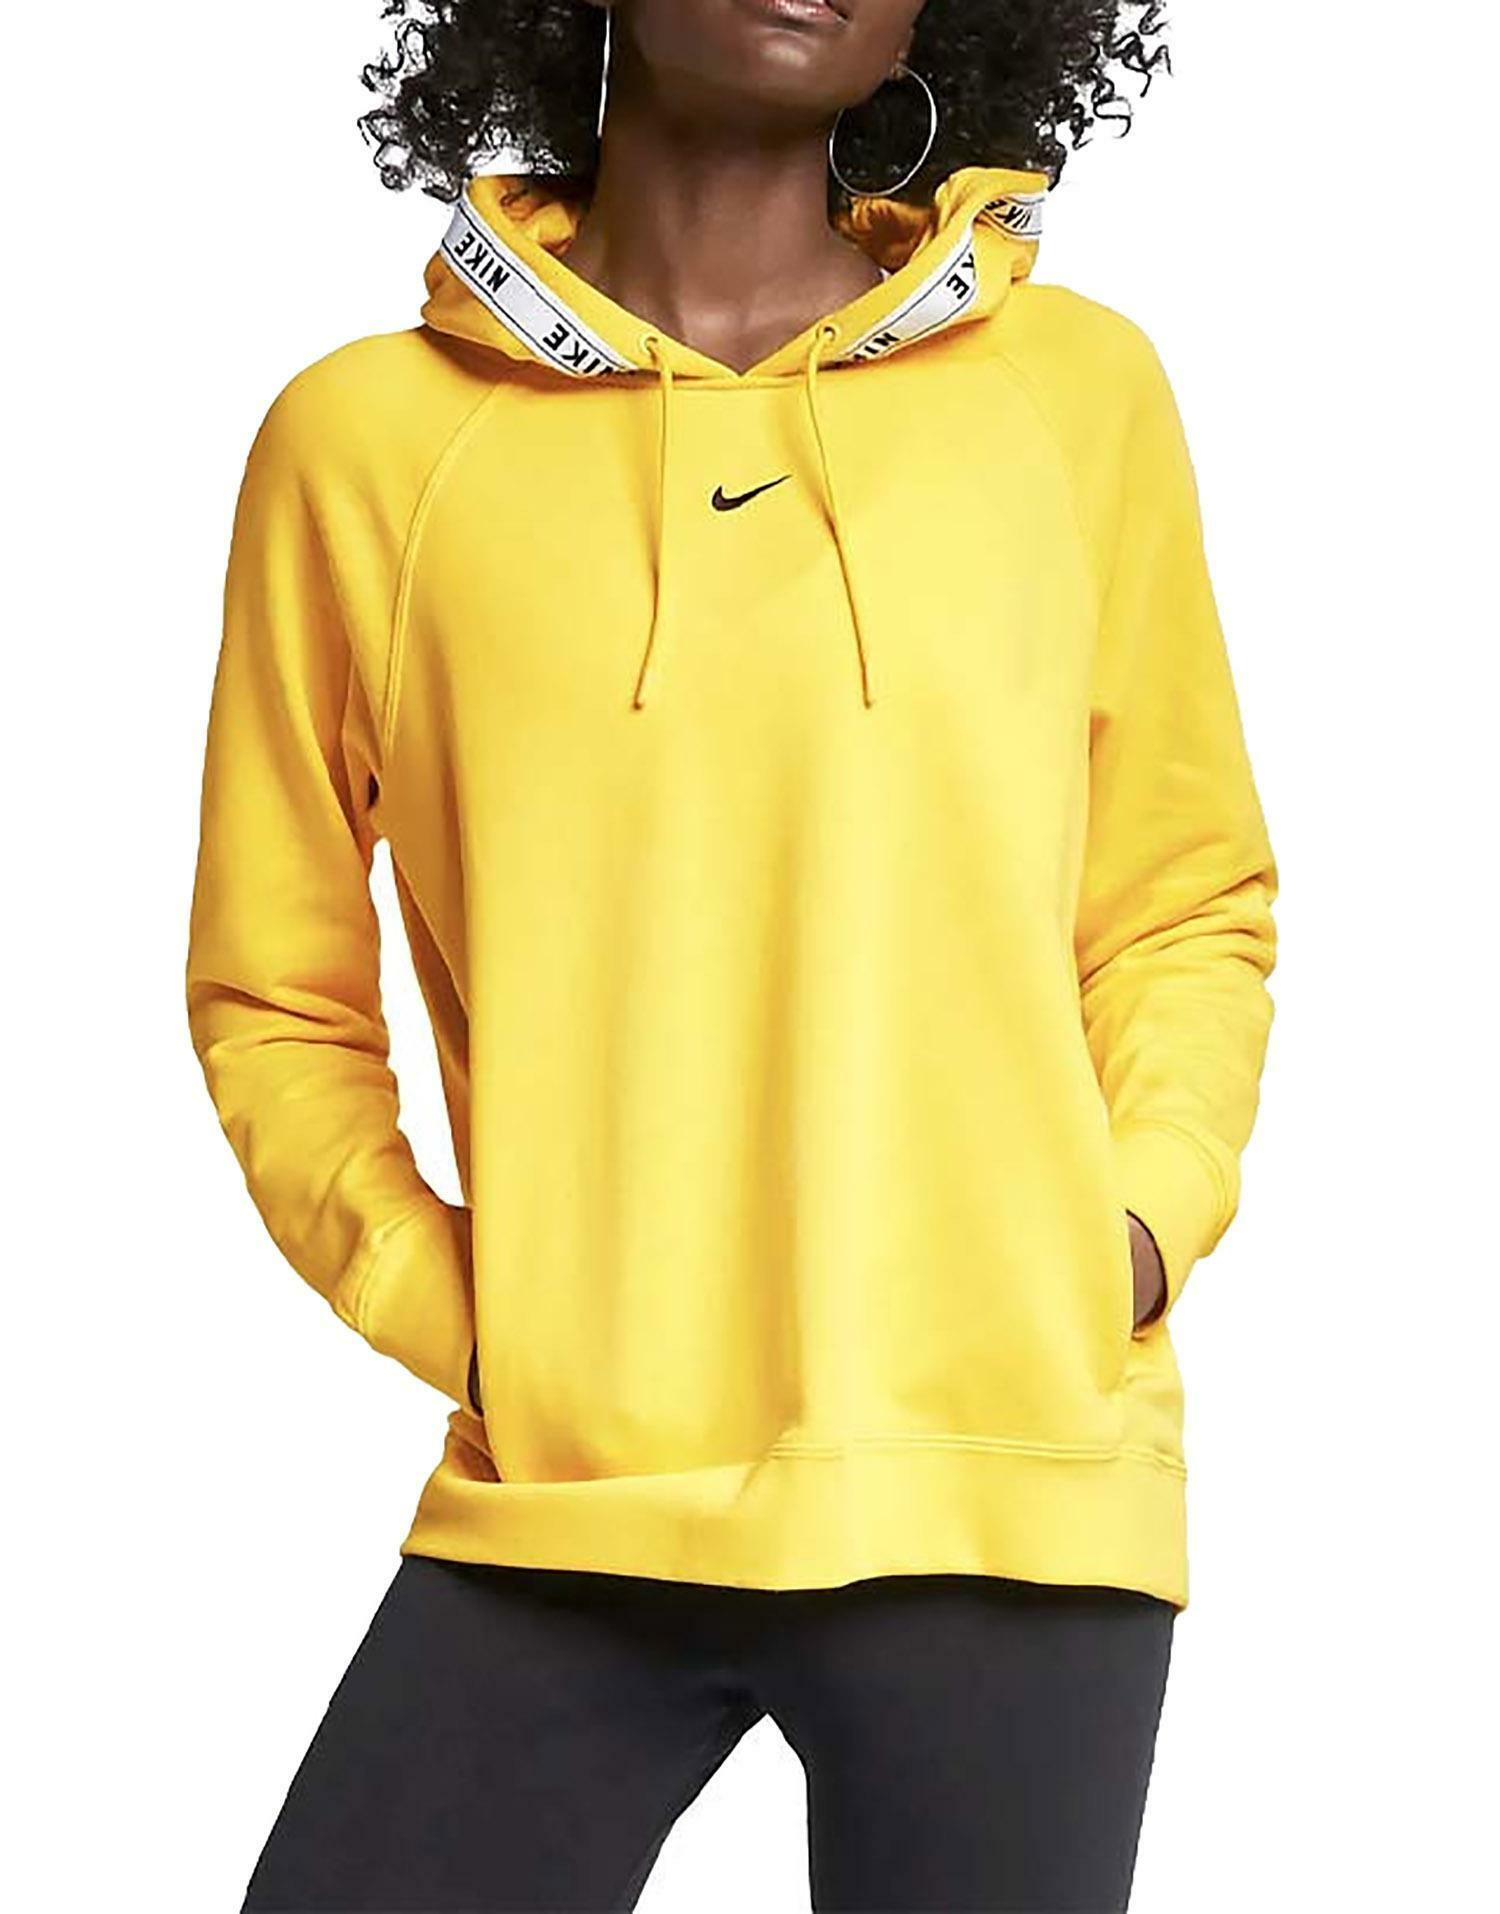 Nike felpa con cappuccio donna gialla ar3058731